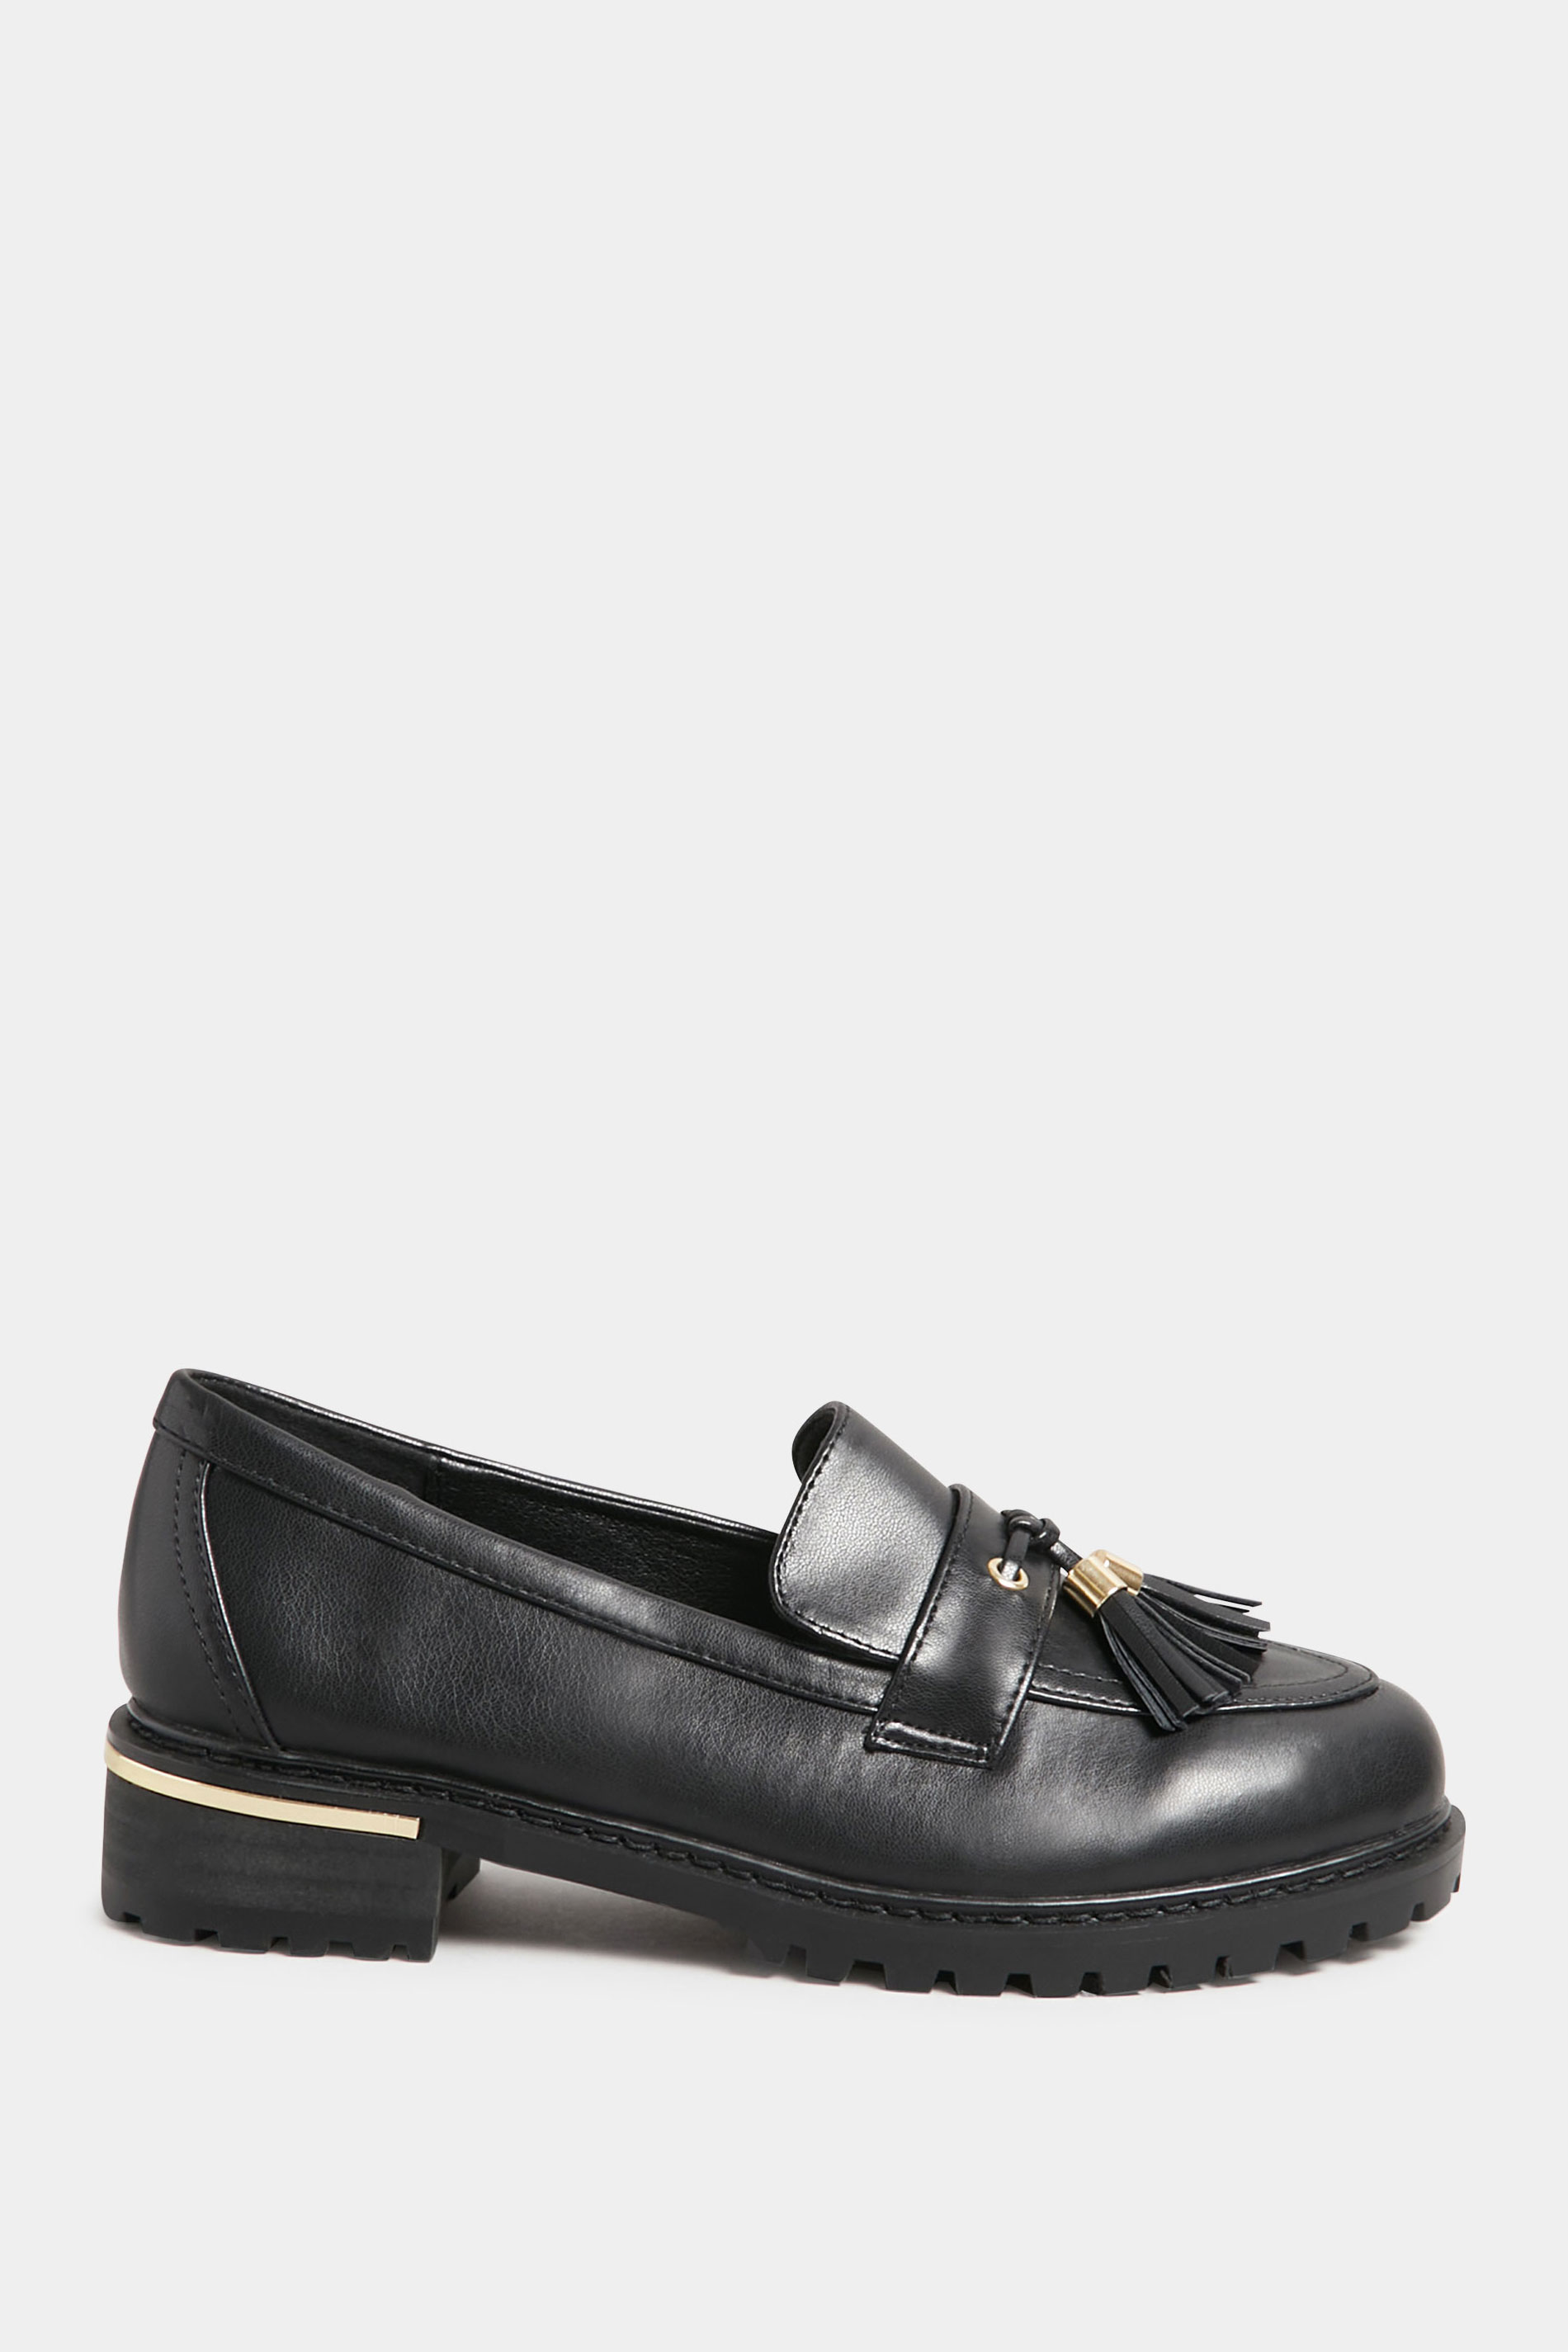 LTS Black Tassel Loafers In Standard Fit | Long Tall Sally 3